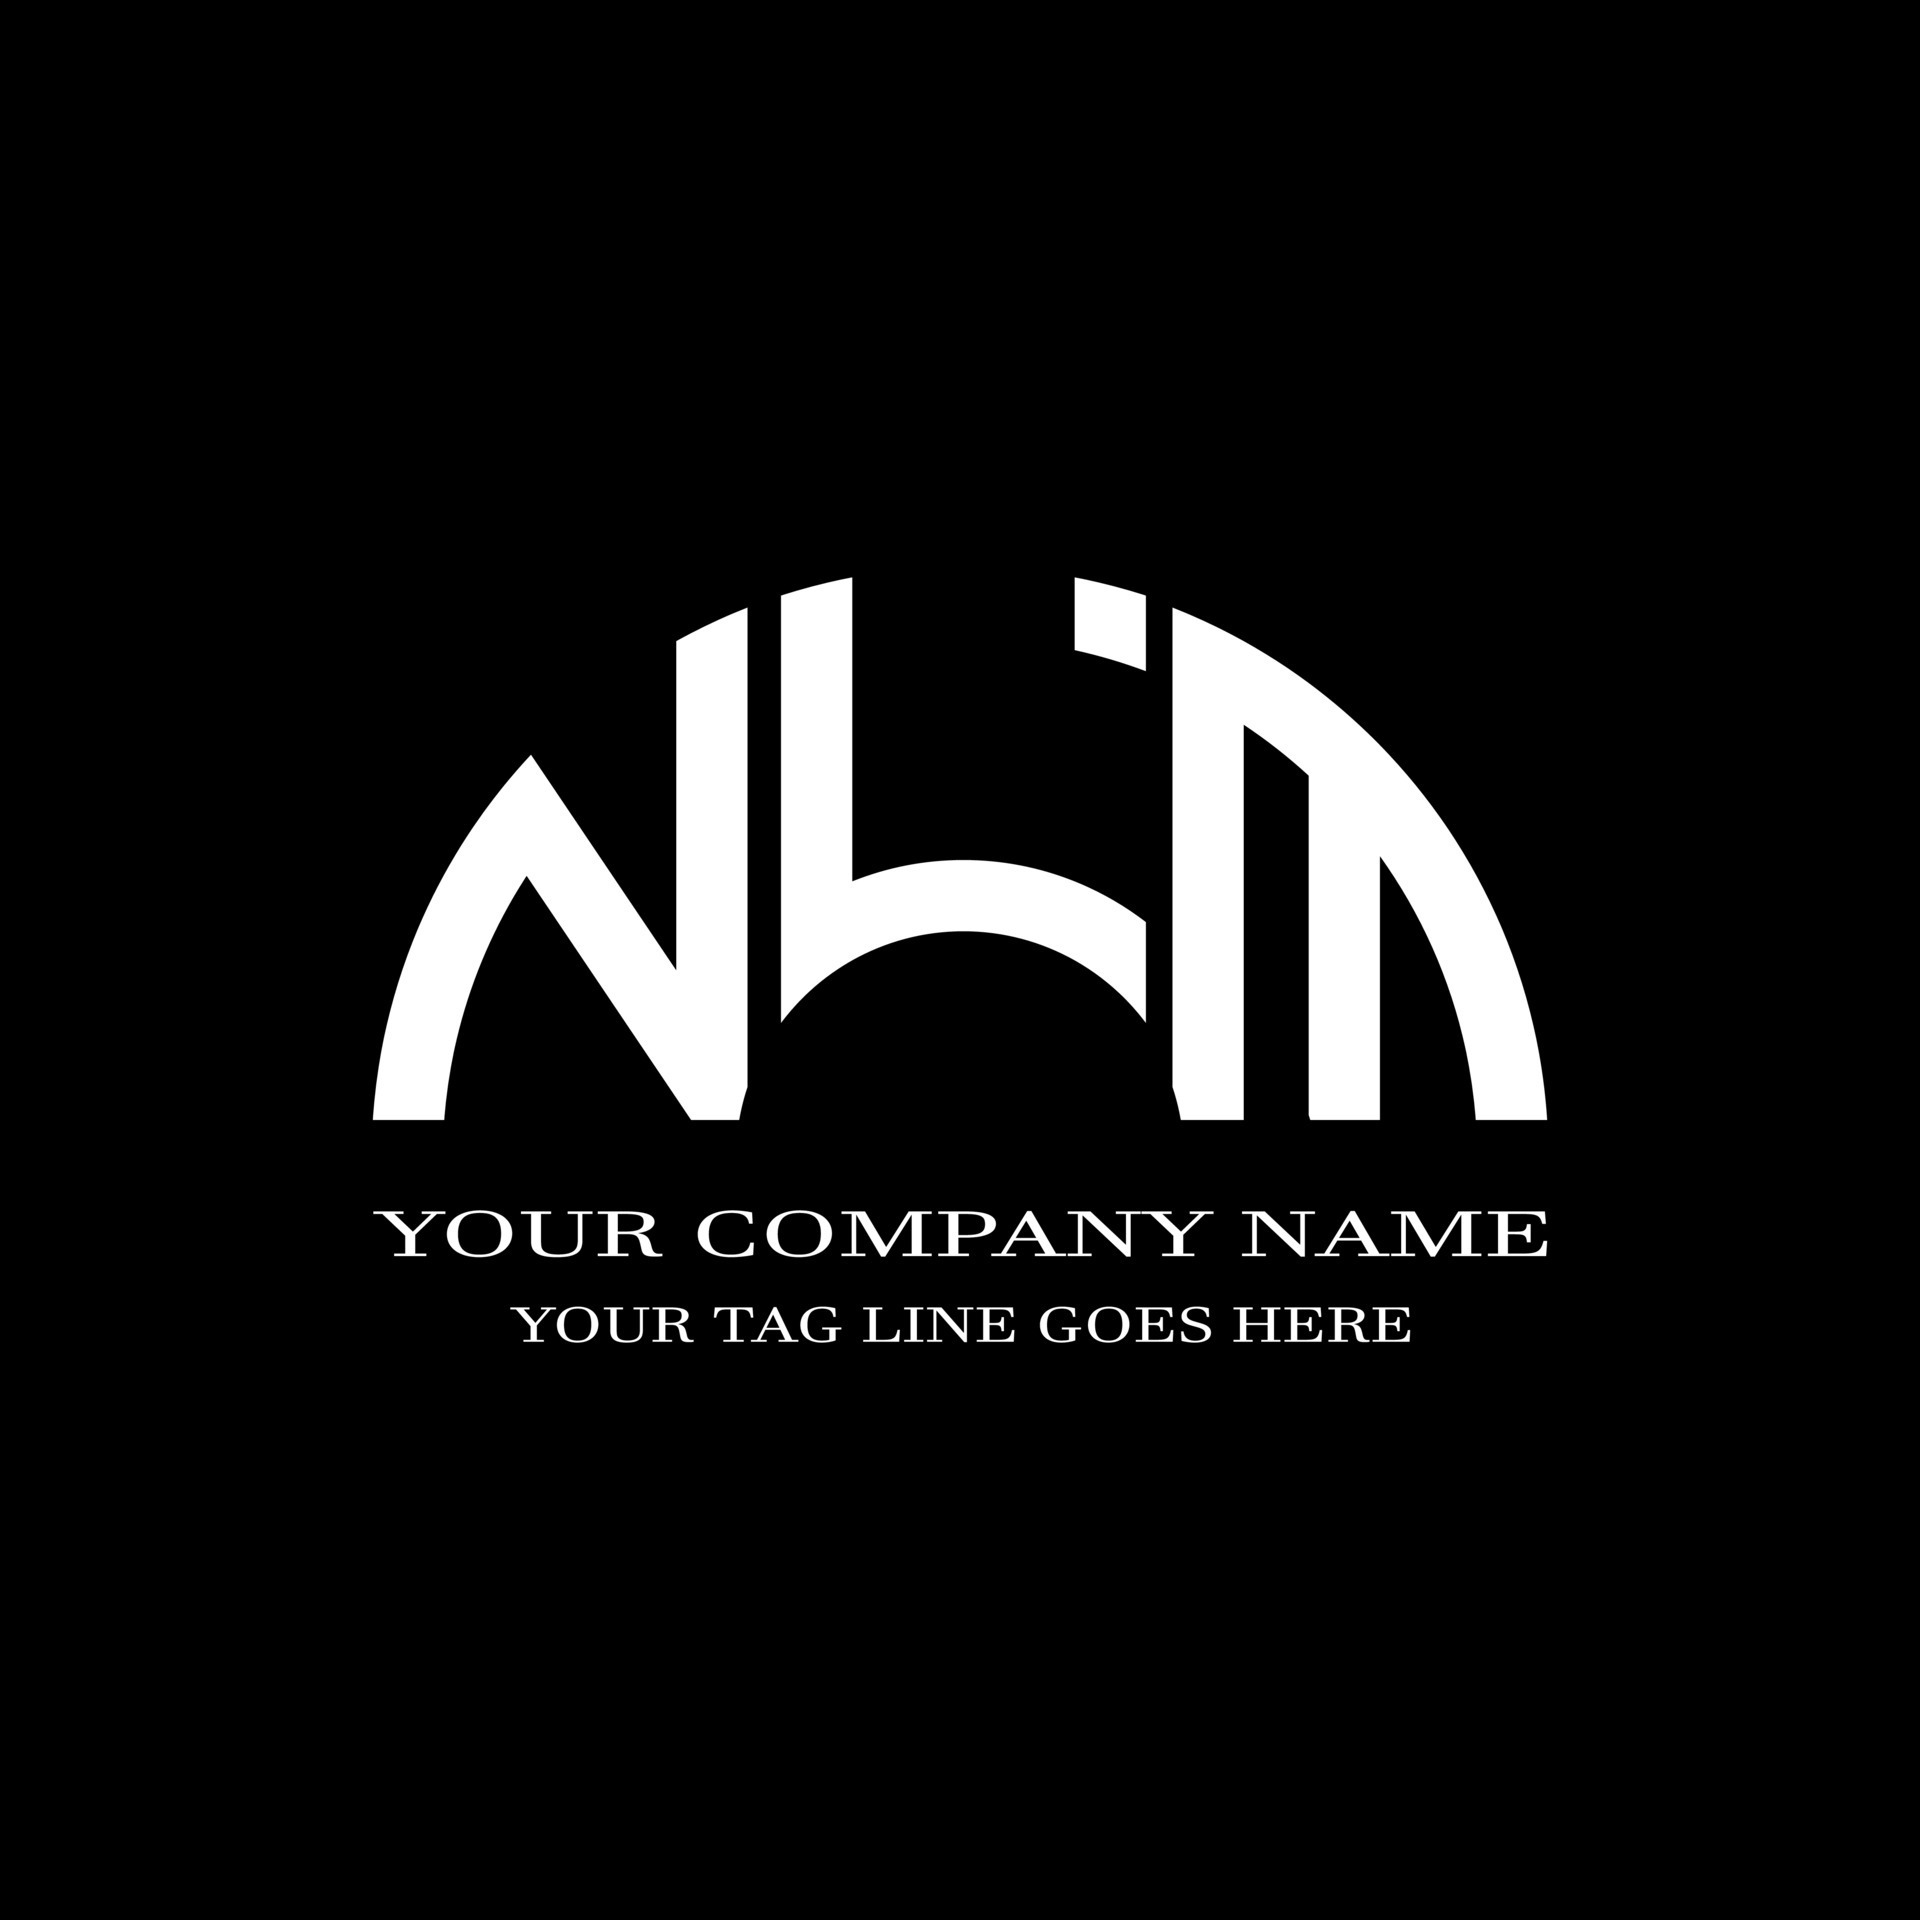 NLM letter logo creative design with vector graphic 8144523 Vector Art ...